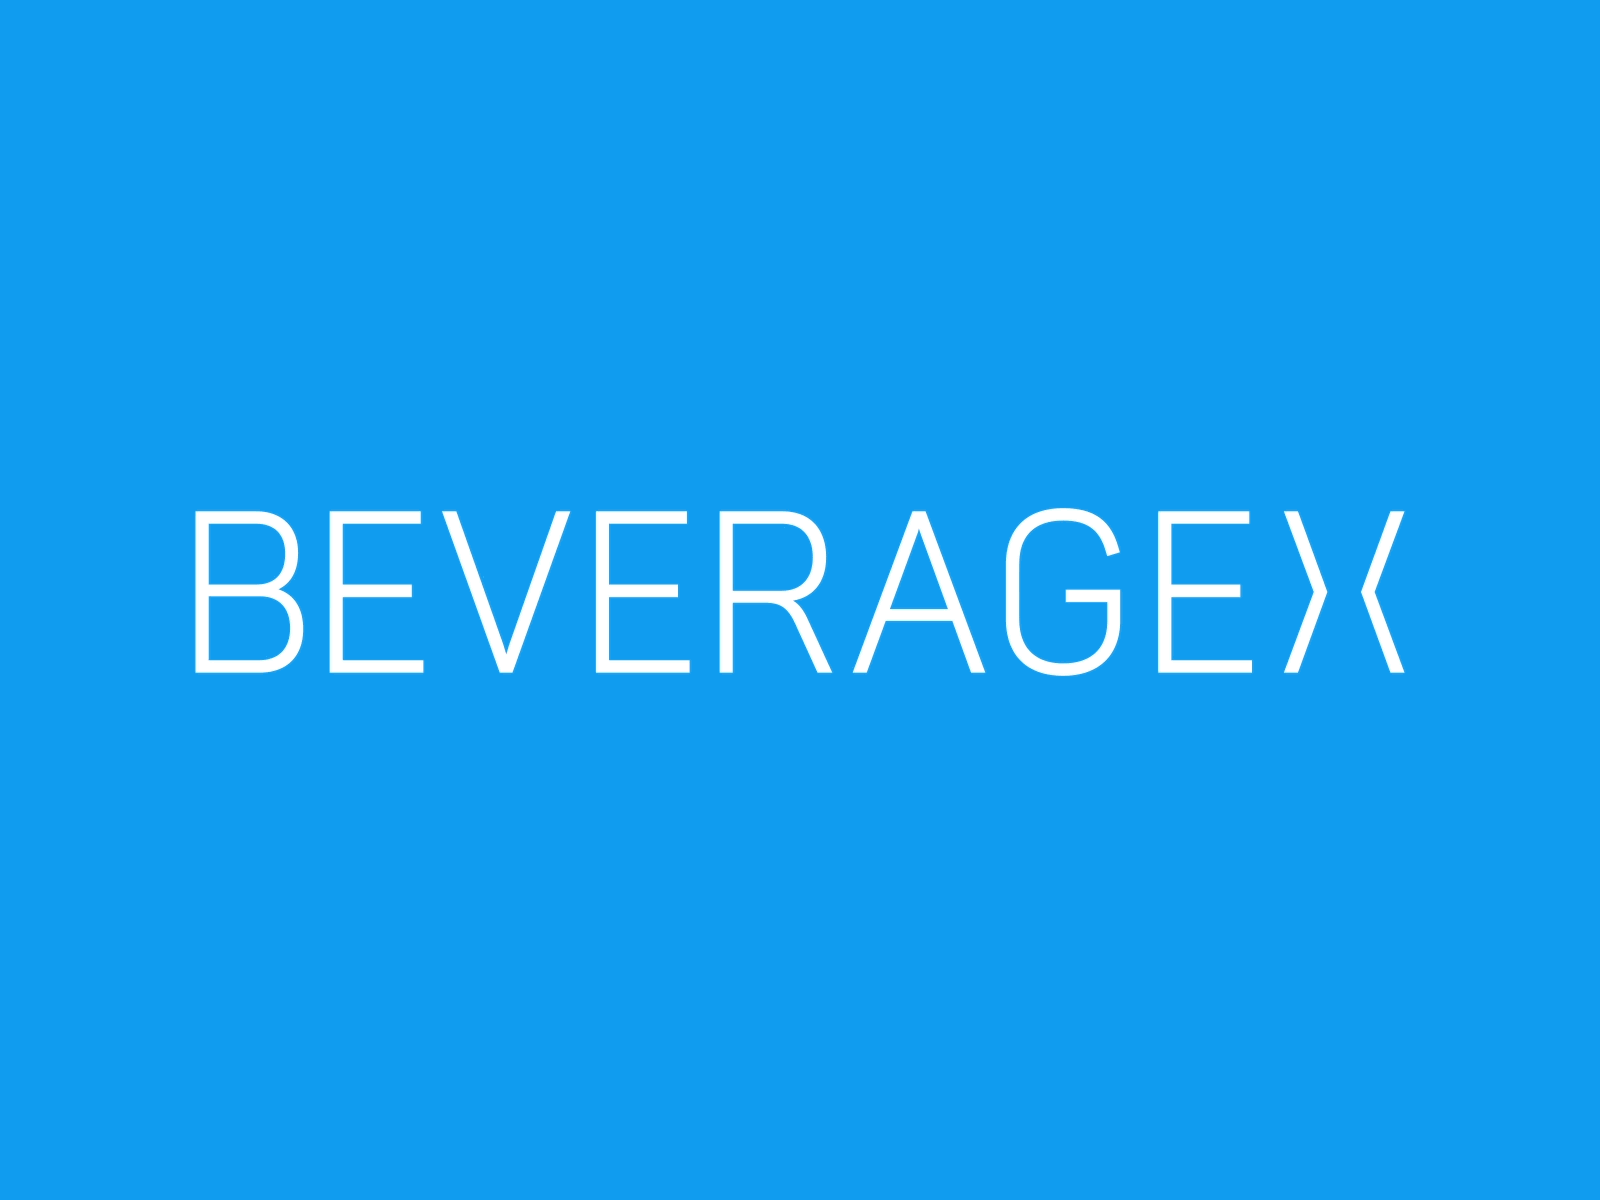 BeverageX | Visual Identity